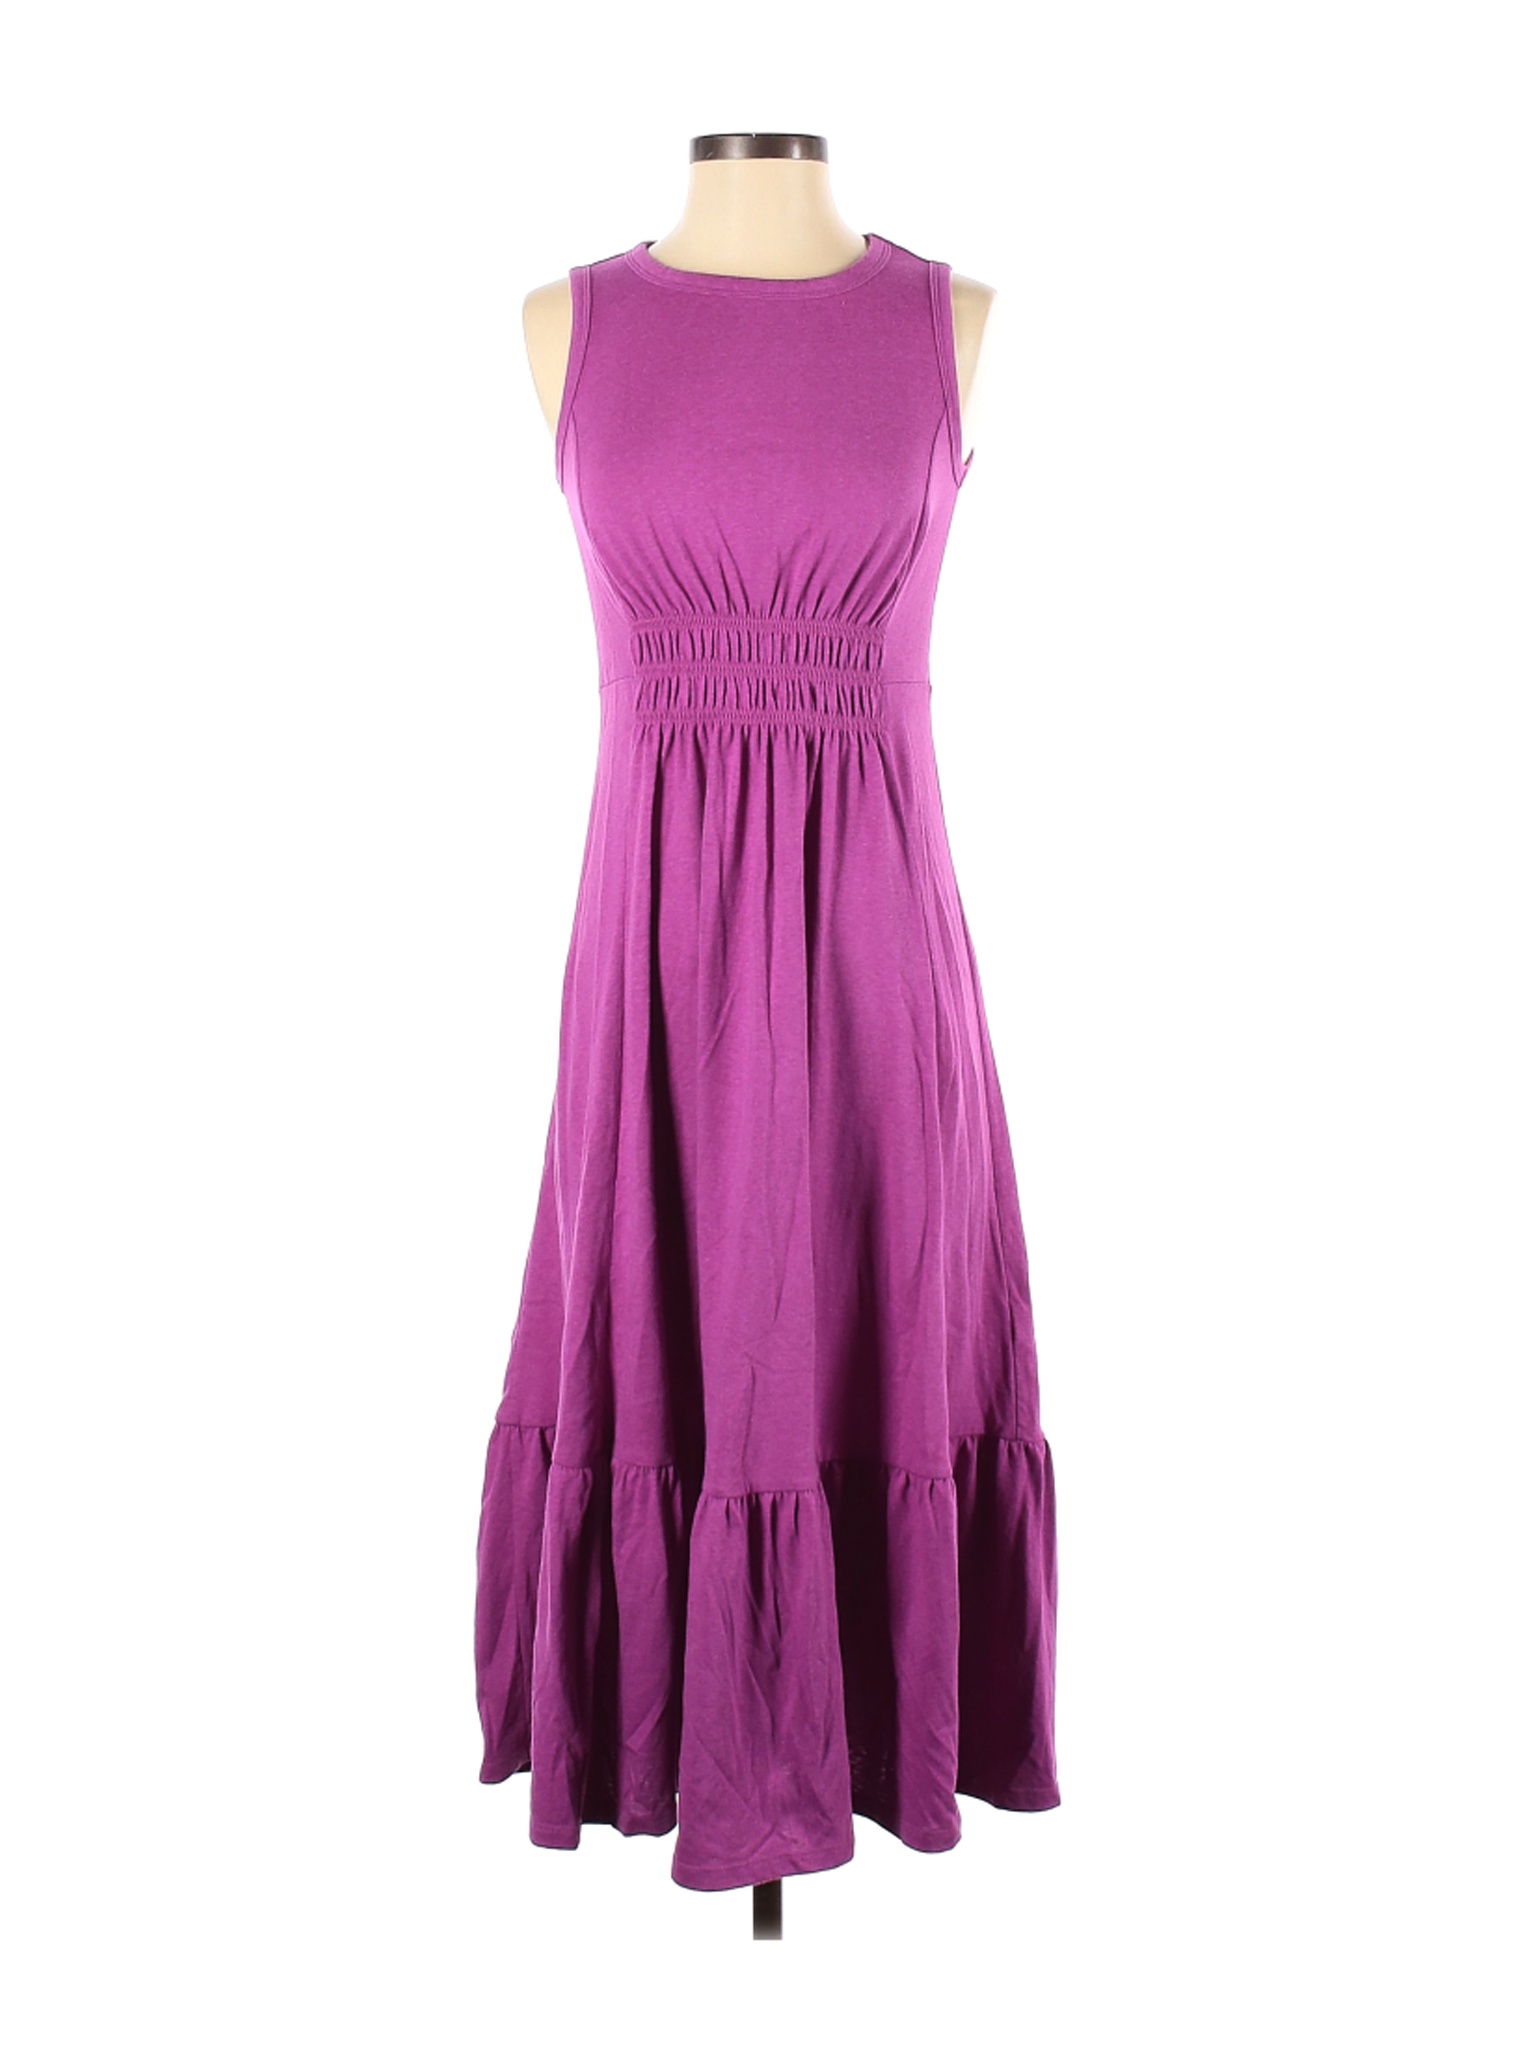 Gap Women Purple Casual Dress XS Petites | eBay